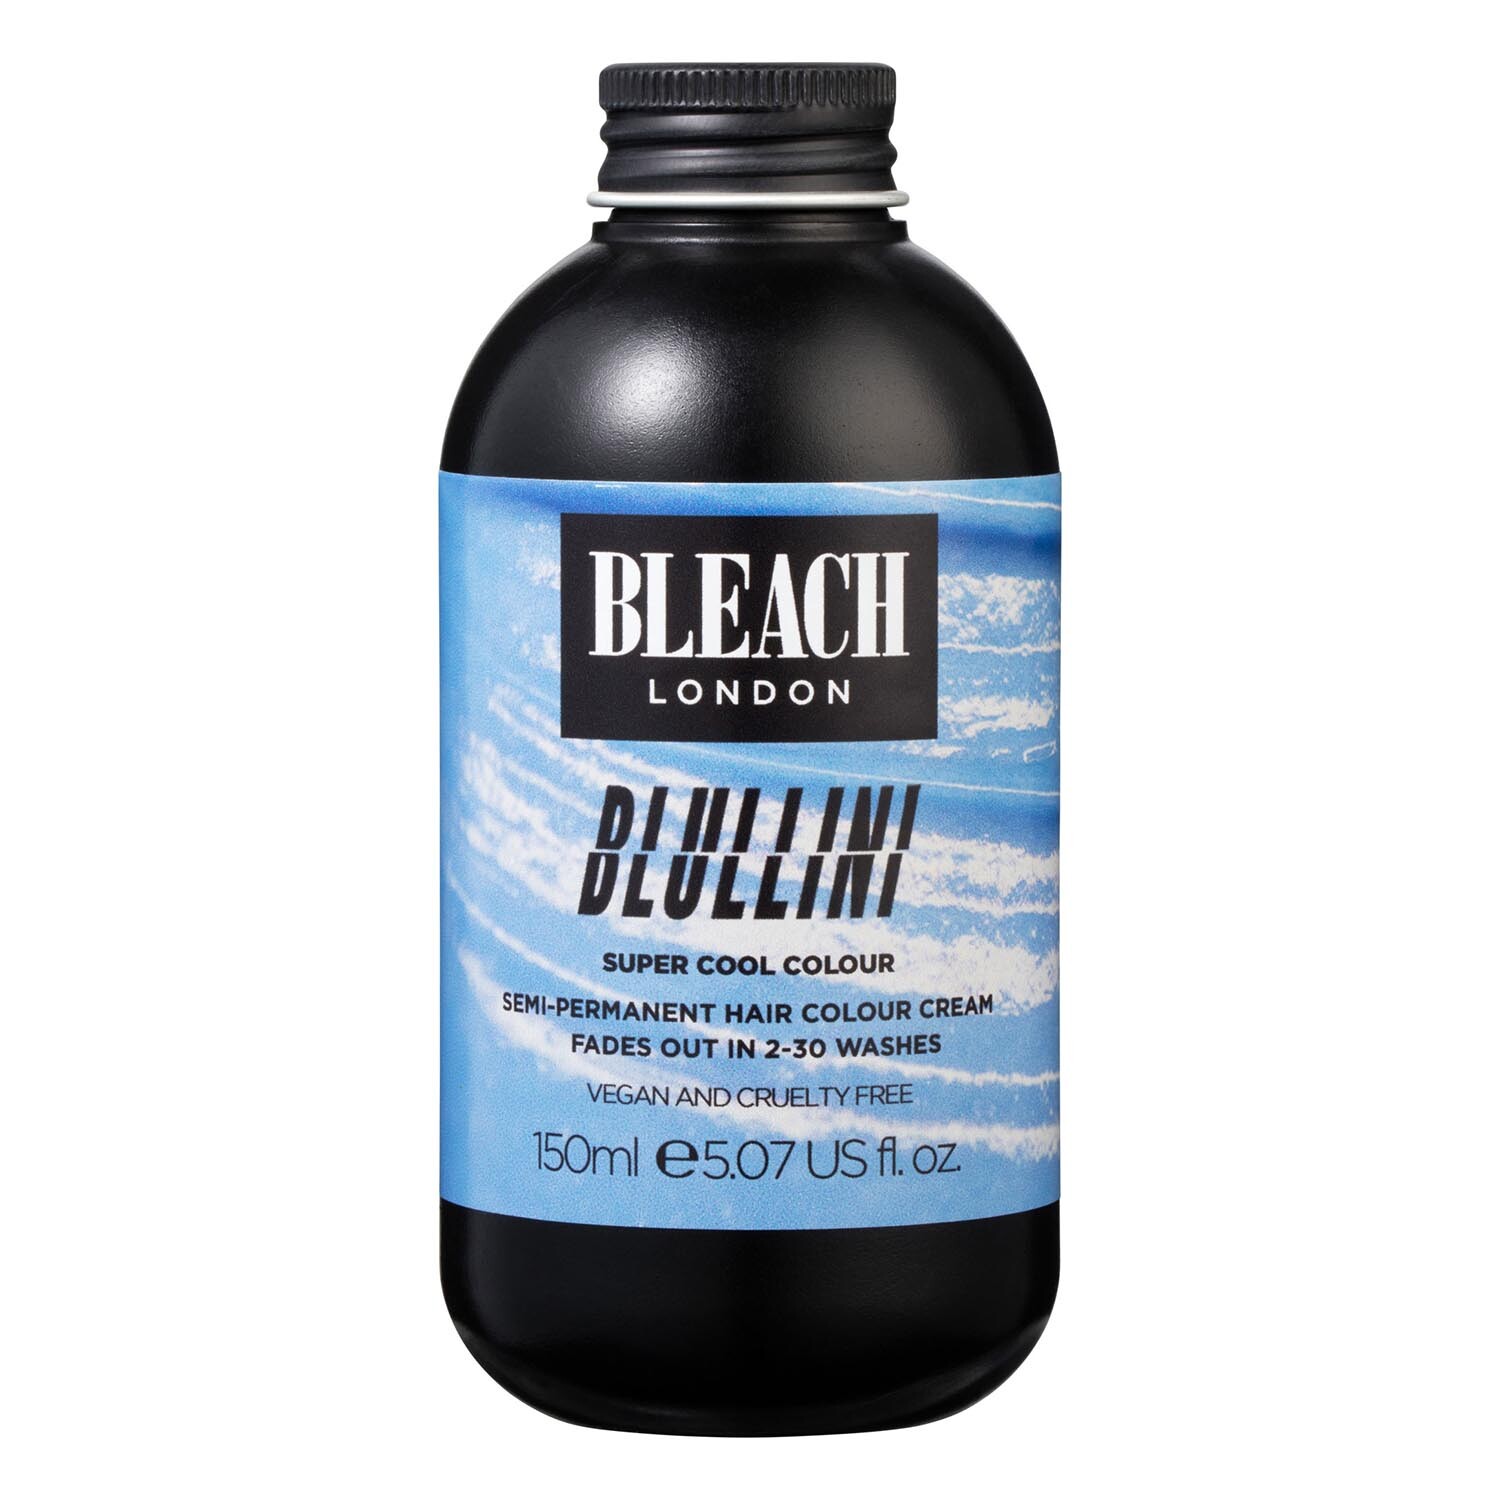 Bleach London Blullini Semi-Permenant Hair Colour - Blue Image